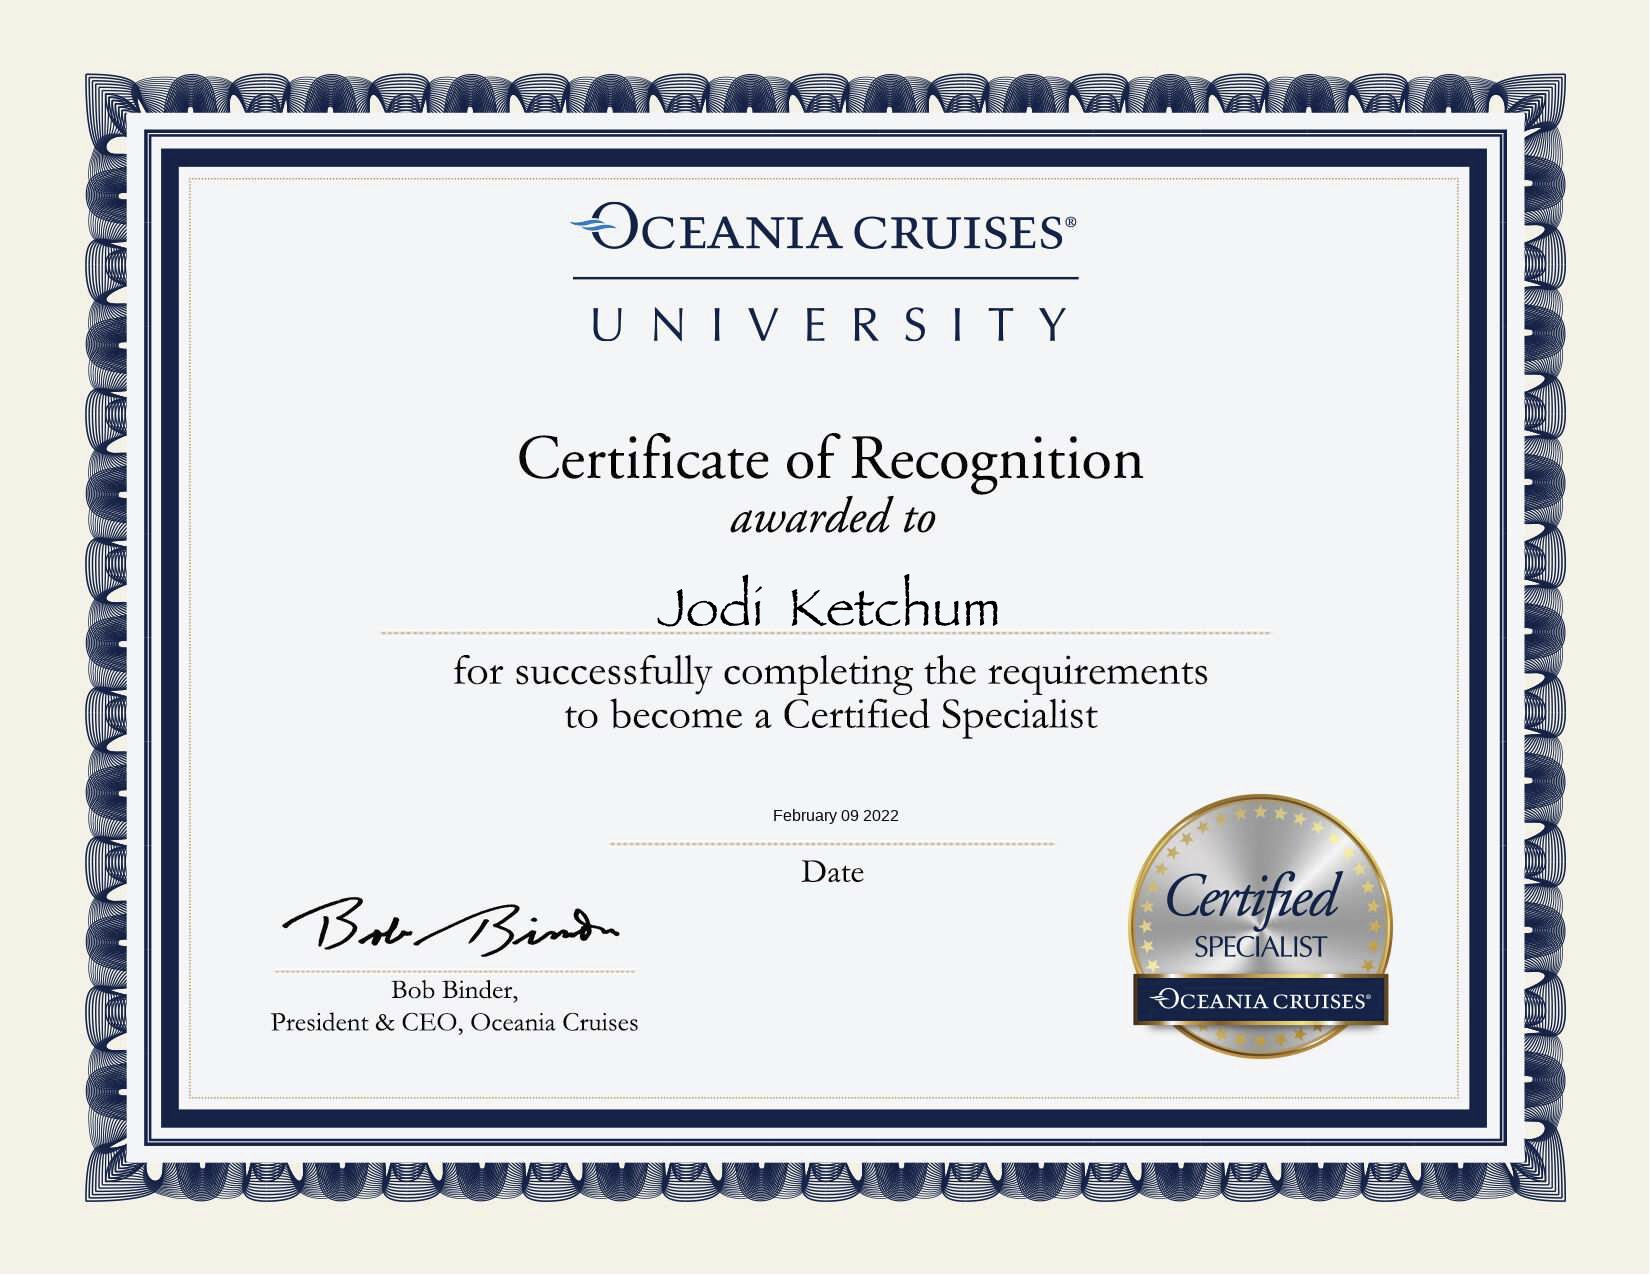 Oceania Cruises Certified Specialist